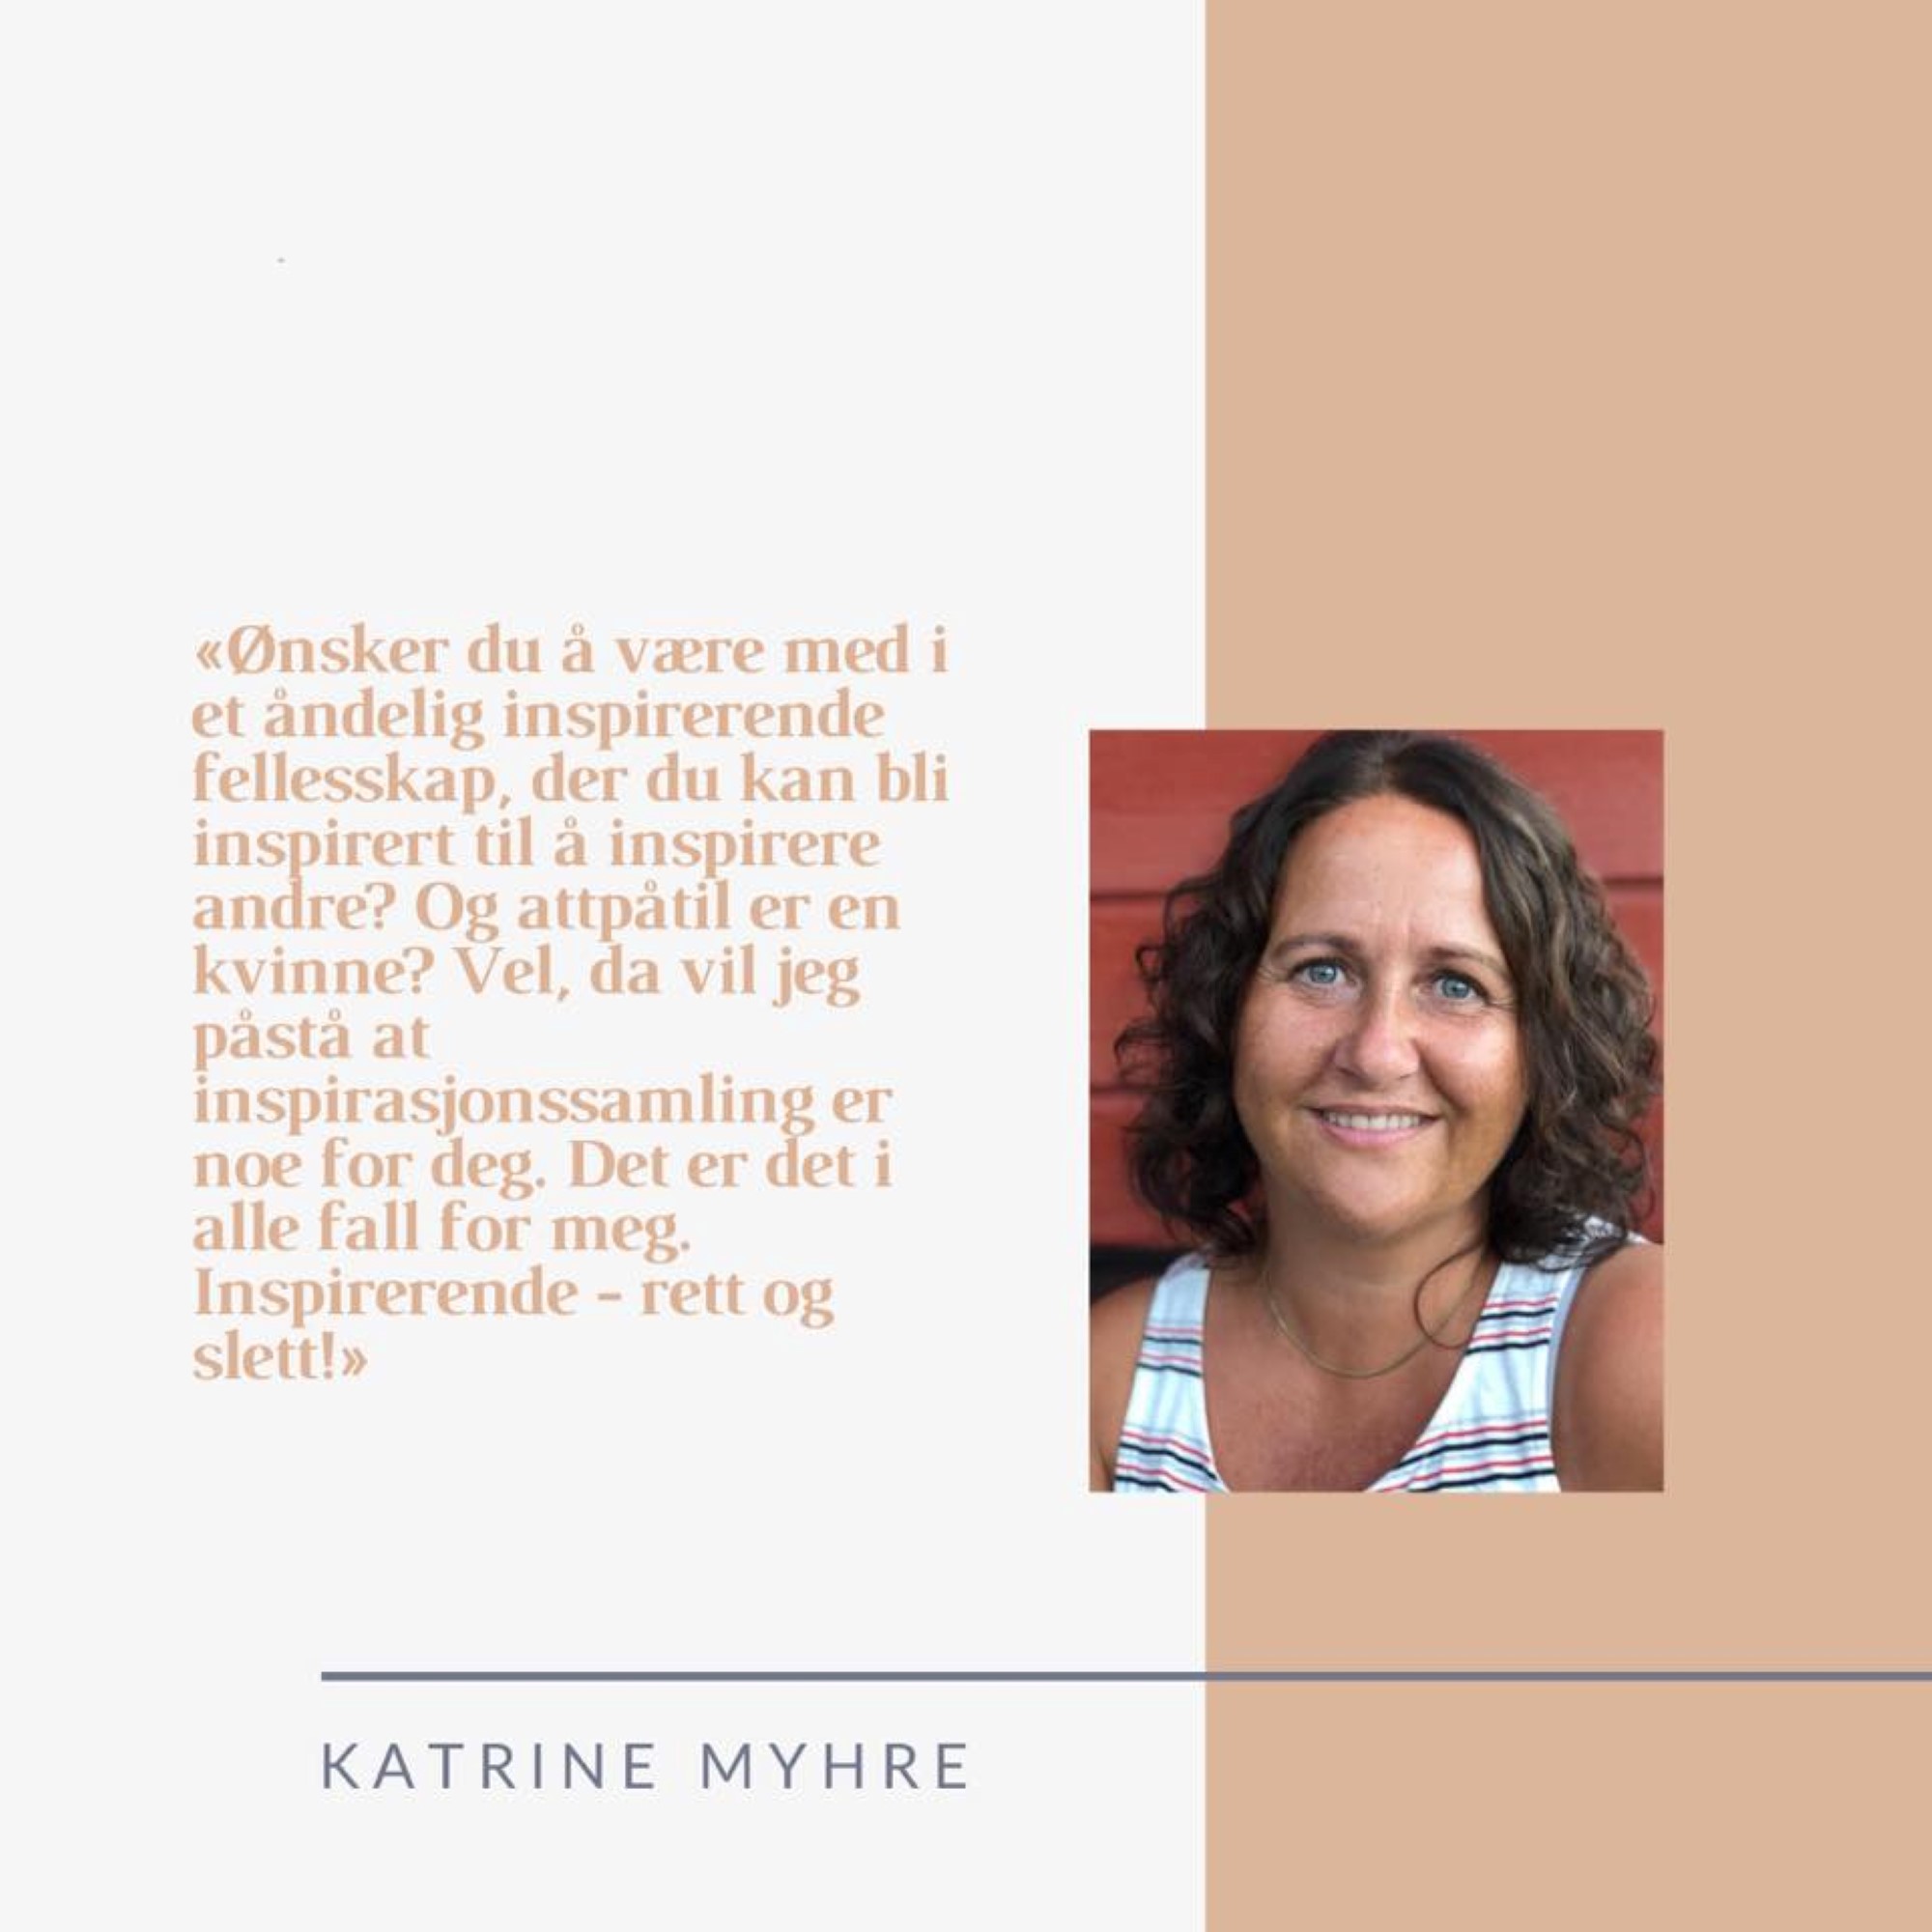 Katrine Myhre